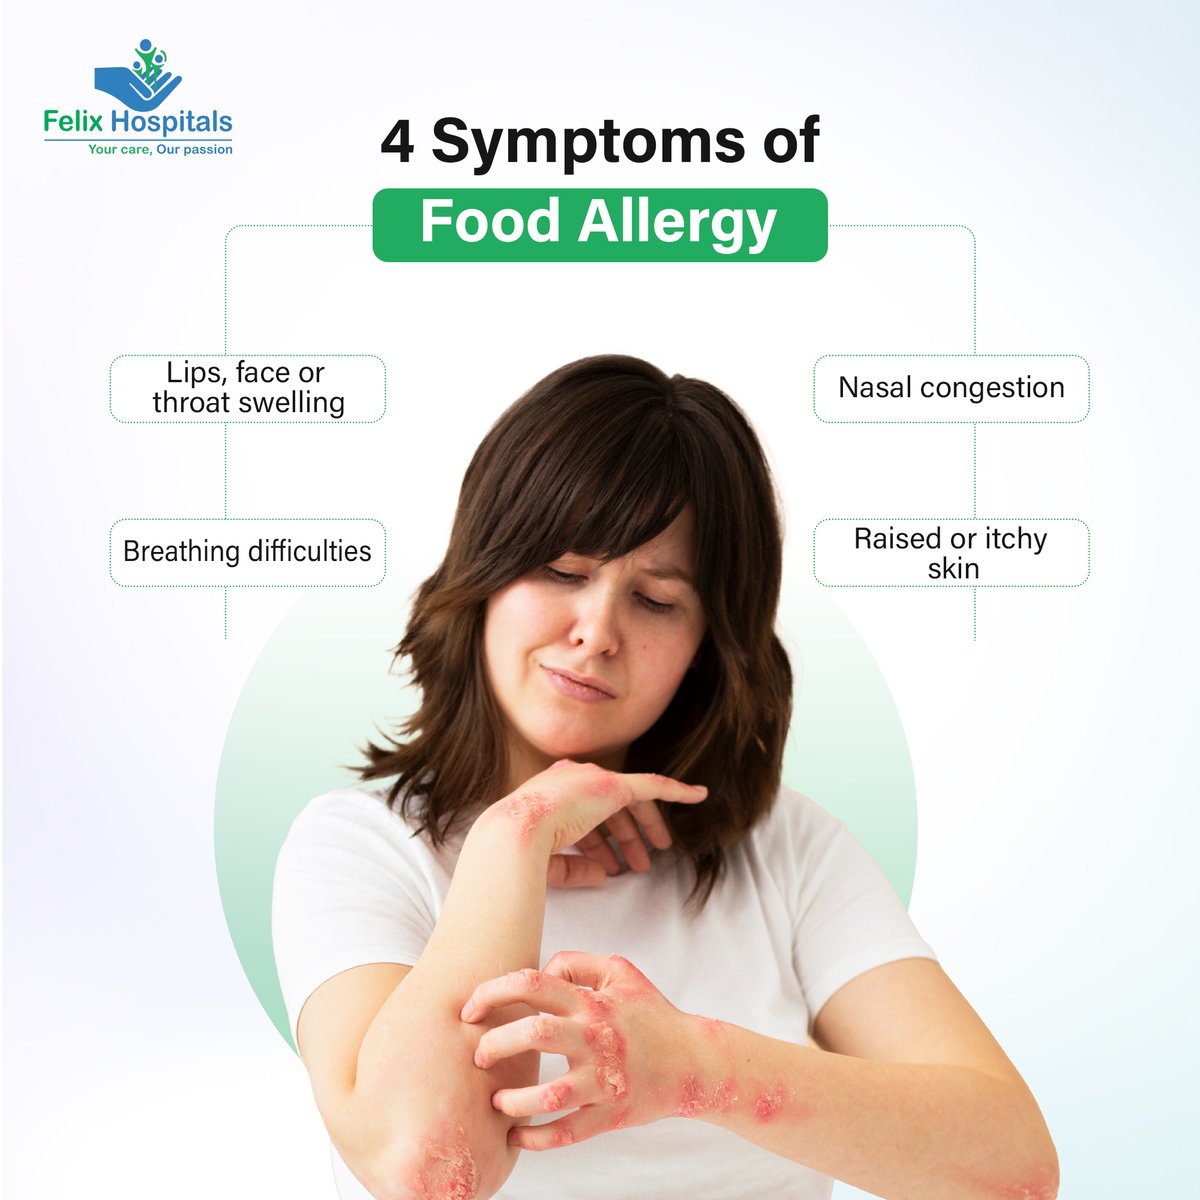 4 Symptoms of food allergy-

#foodallergy #HealthEmergency #allergy #healthcare #medication #FelixHospital